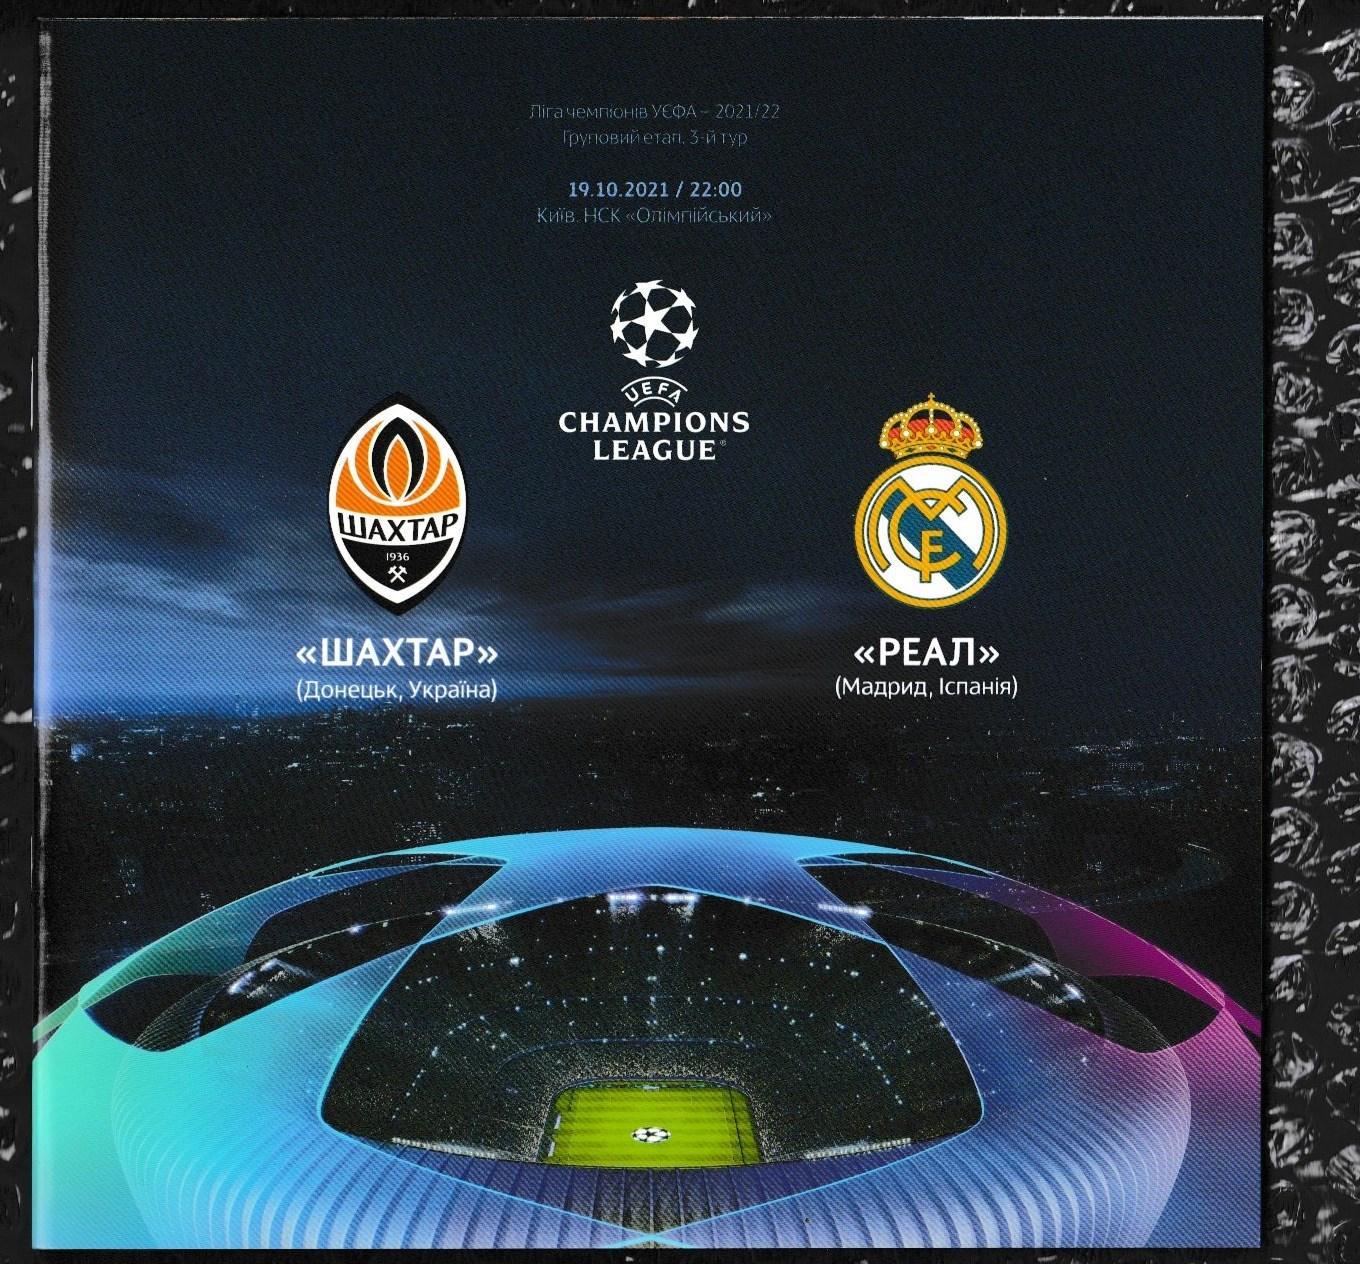 UEFA Champions League 2021/2022 *** Шахтер Донецк-Реал 19.10.2021